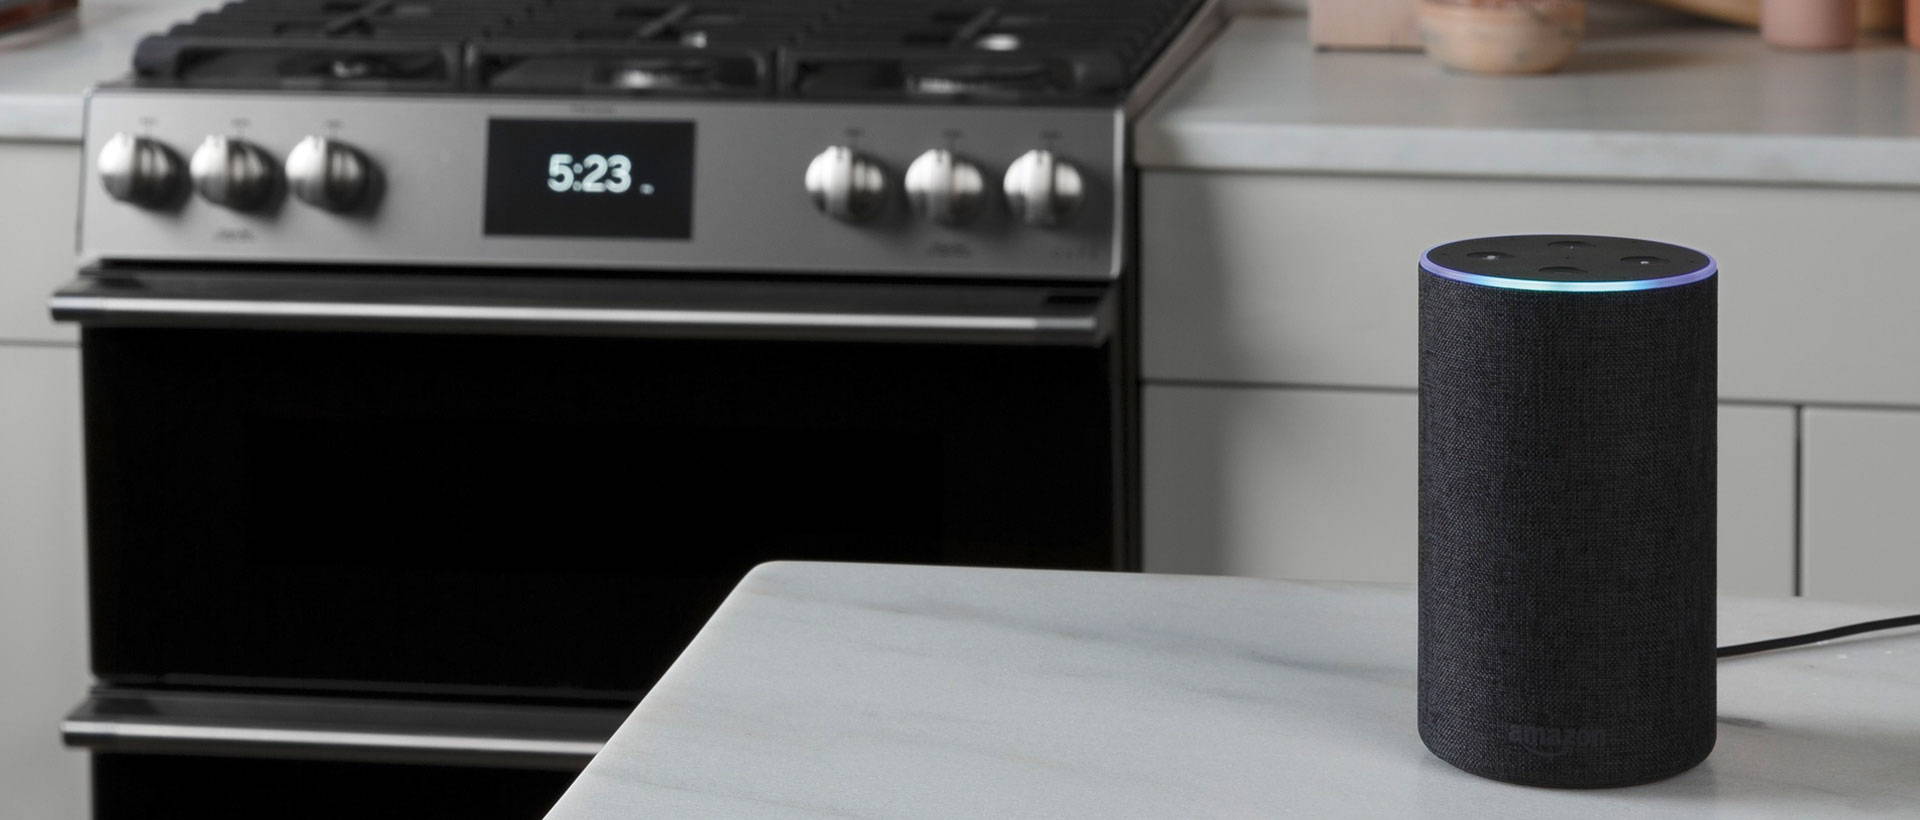 Amazon Alexa on counter by Cafe Appliances Smart Range